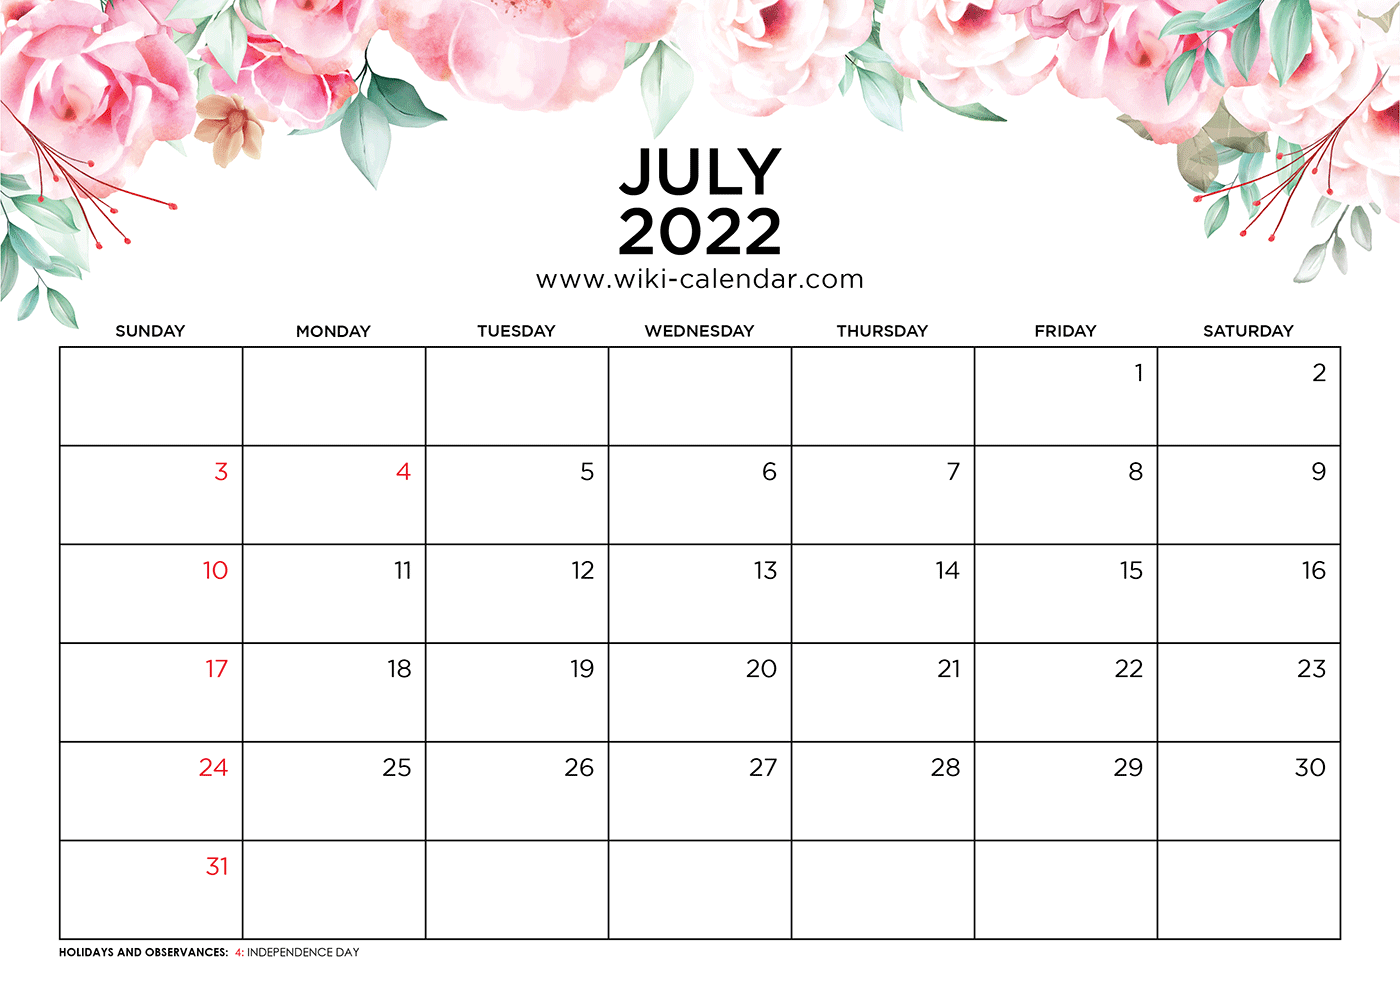 July 2022 Calendar Printable with Holidays